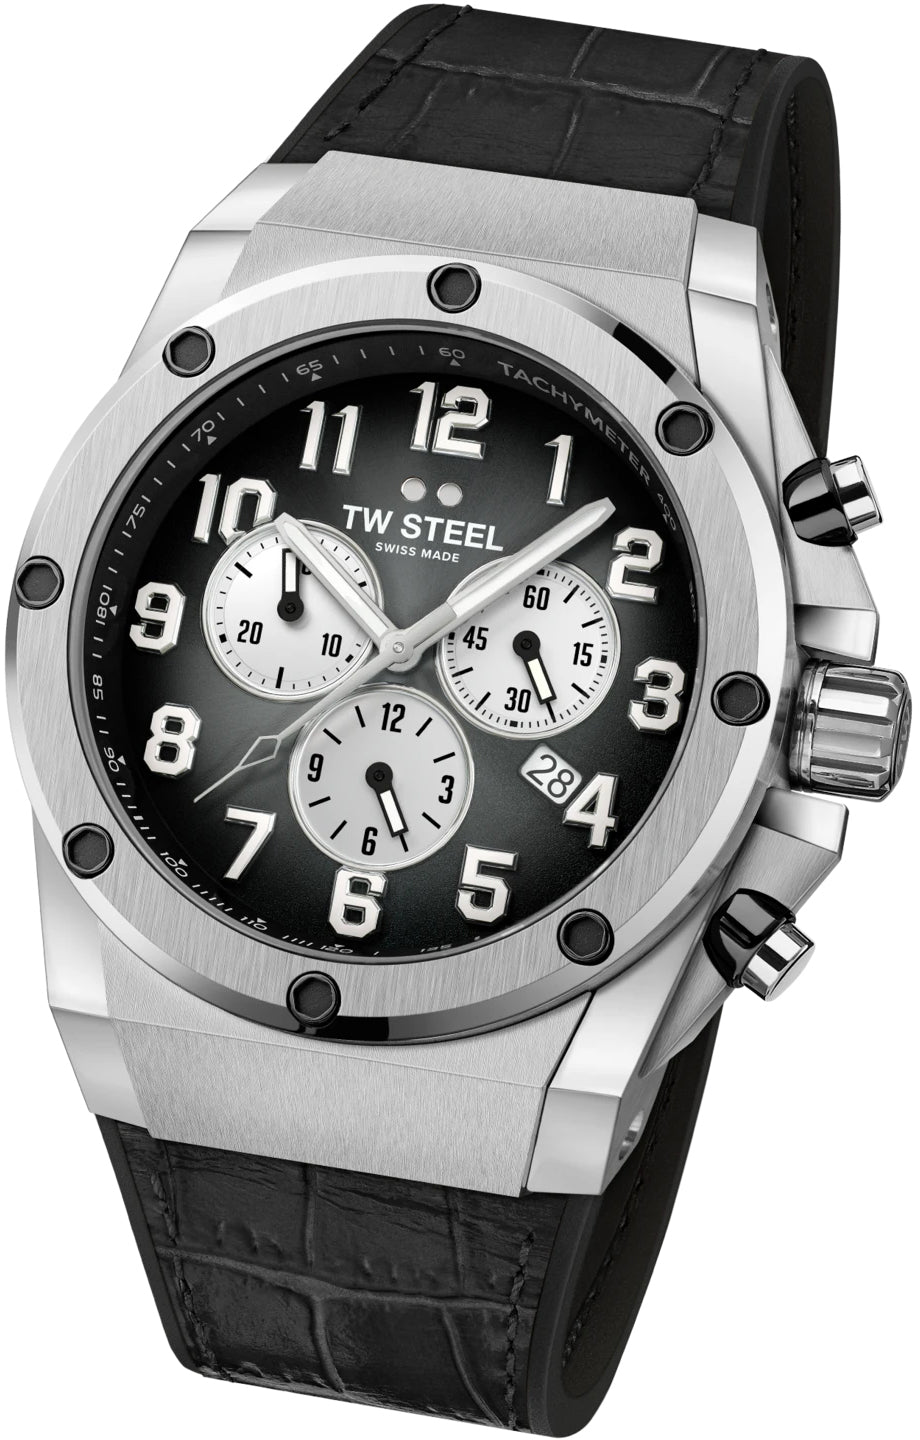 Photos - Wrist Watch TW Steel Watch ACE Genesis Limited Edition TW-628 